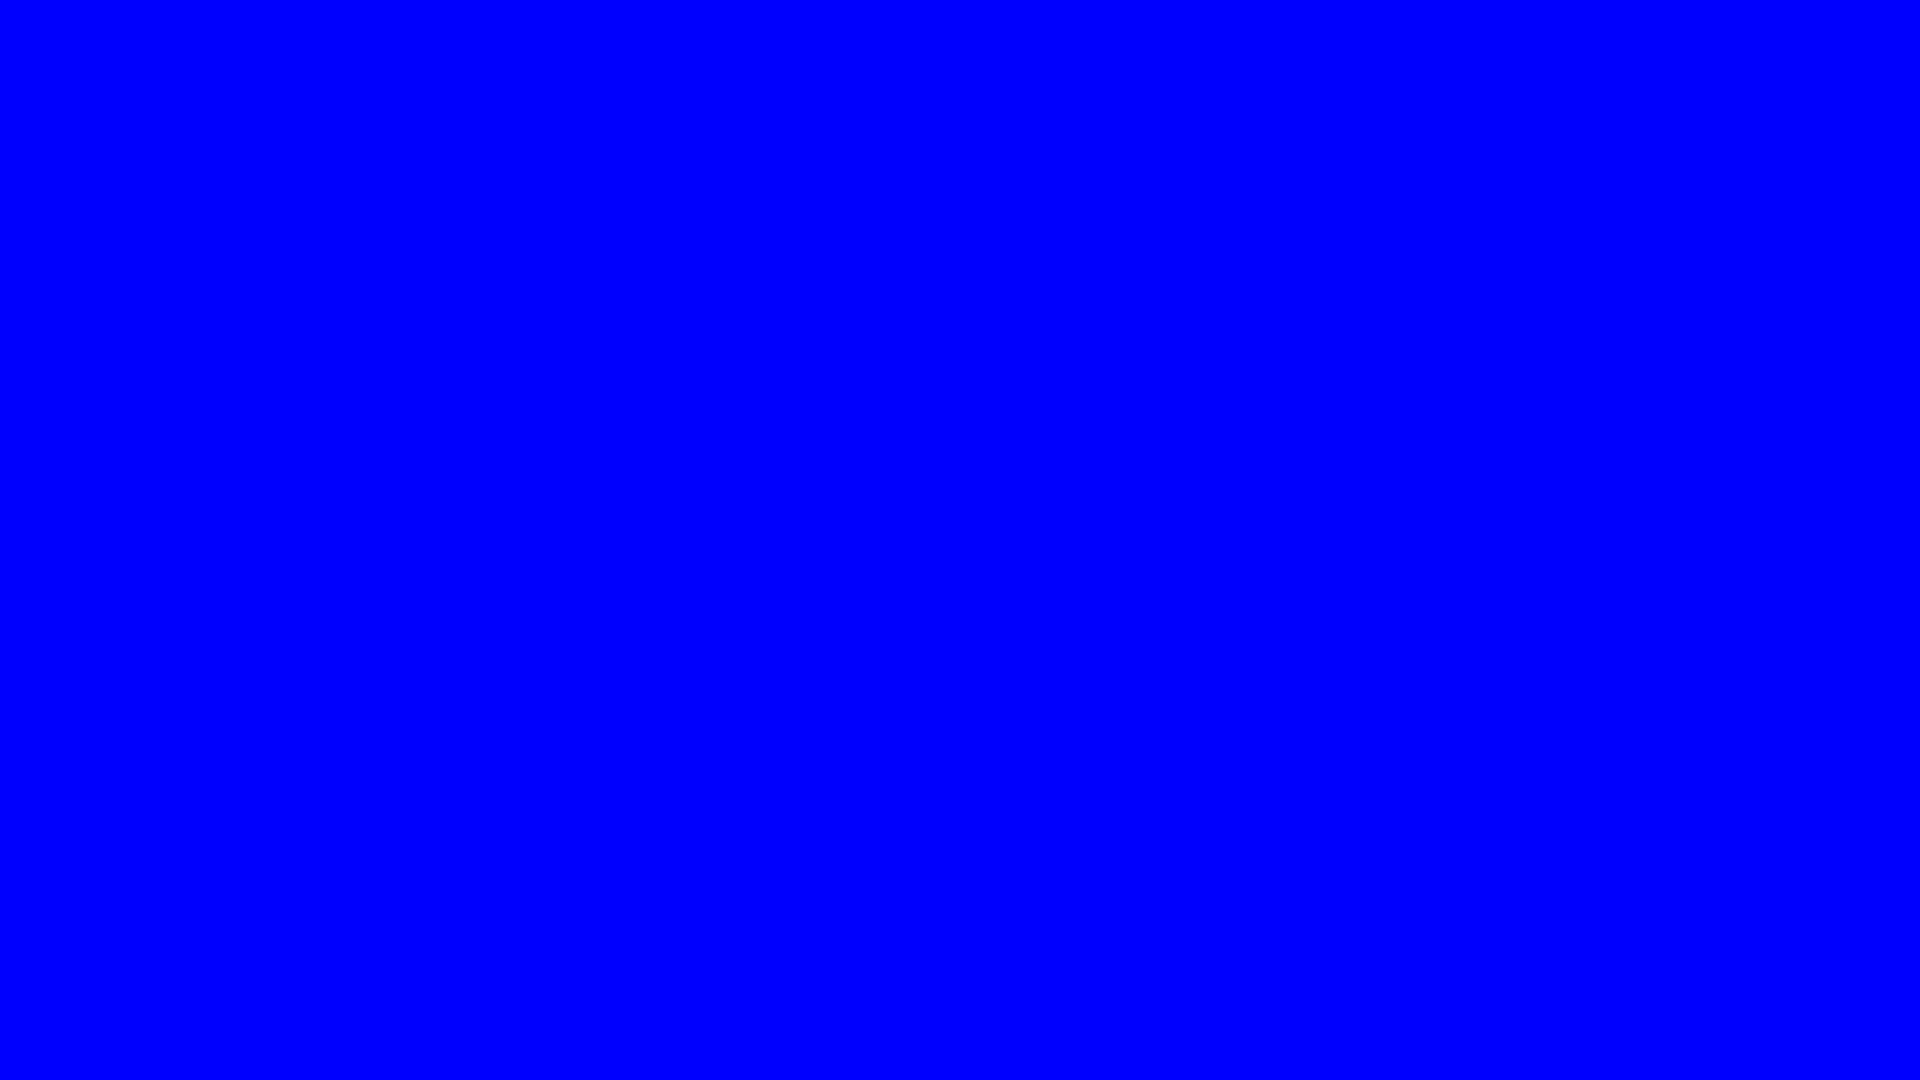 Plain Blue Screen Wallpapers 1920x1080 - Wallpaper Cave